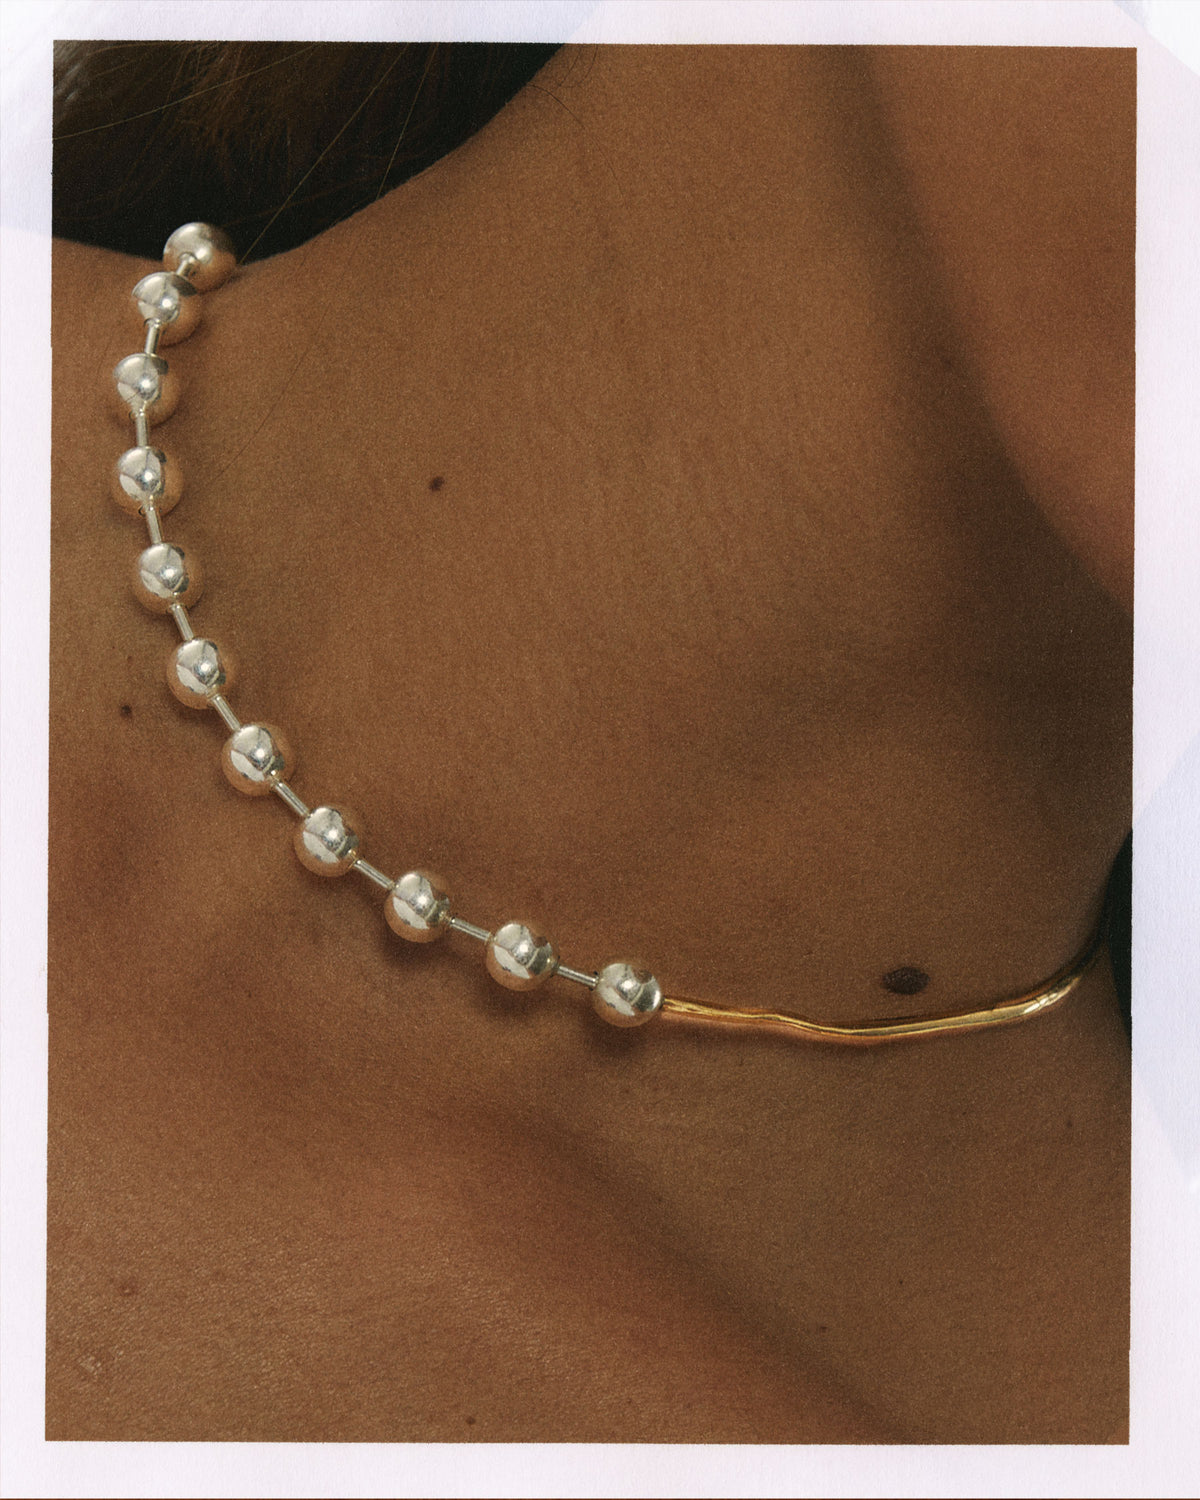 wireball necklace